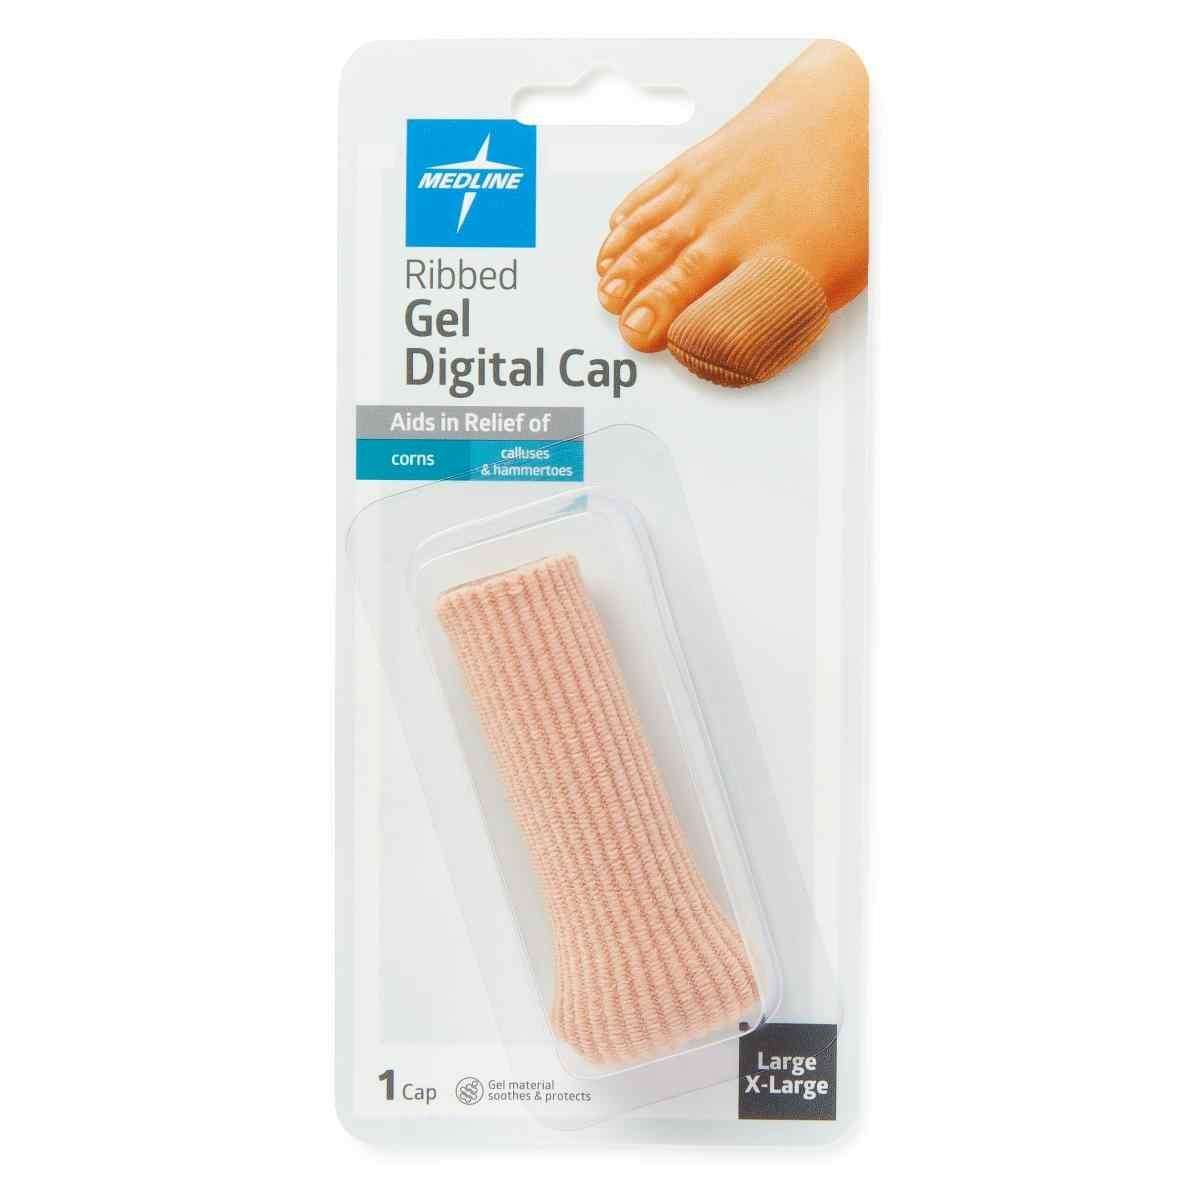 Medline Ribbed Gel Digital Toe Caps, POD14204, Size L/XL - 1 Each